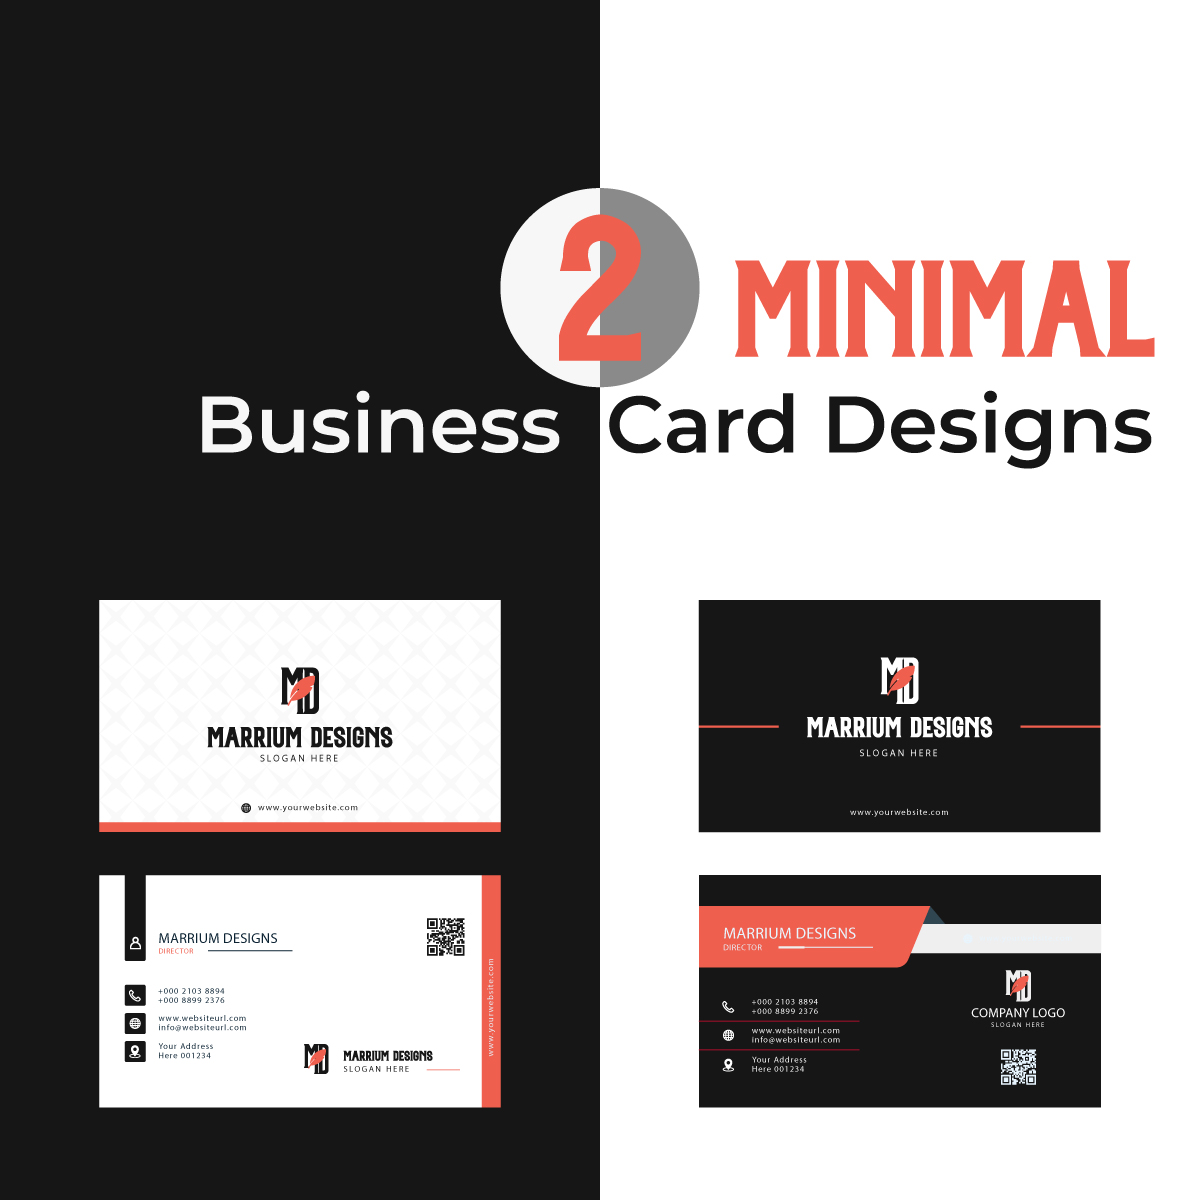 2 minimal business card designs